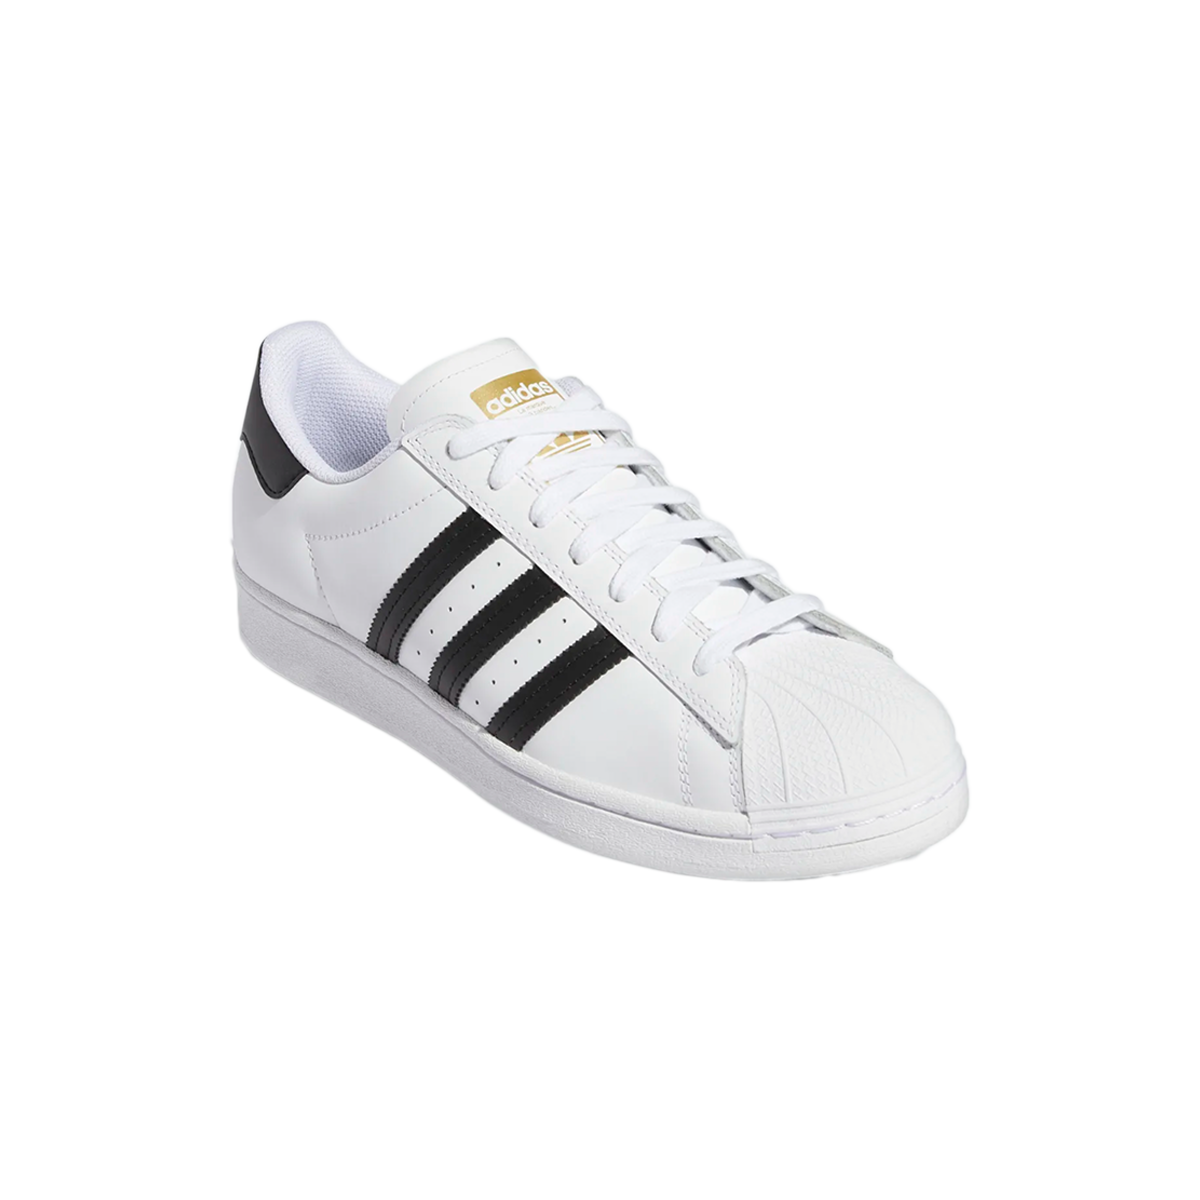 Adidas Superstar Leather ADV Shoe - White